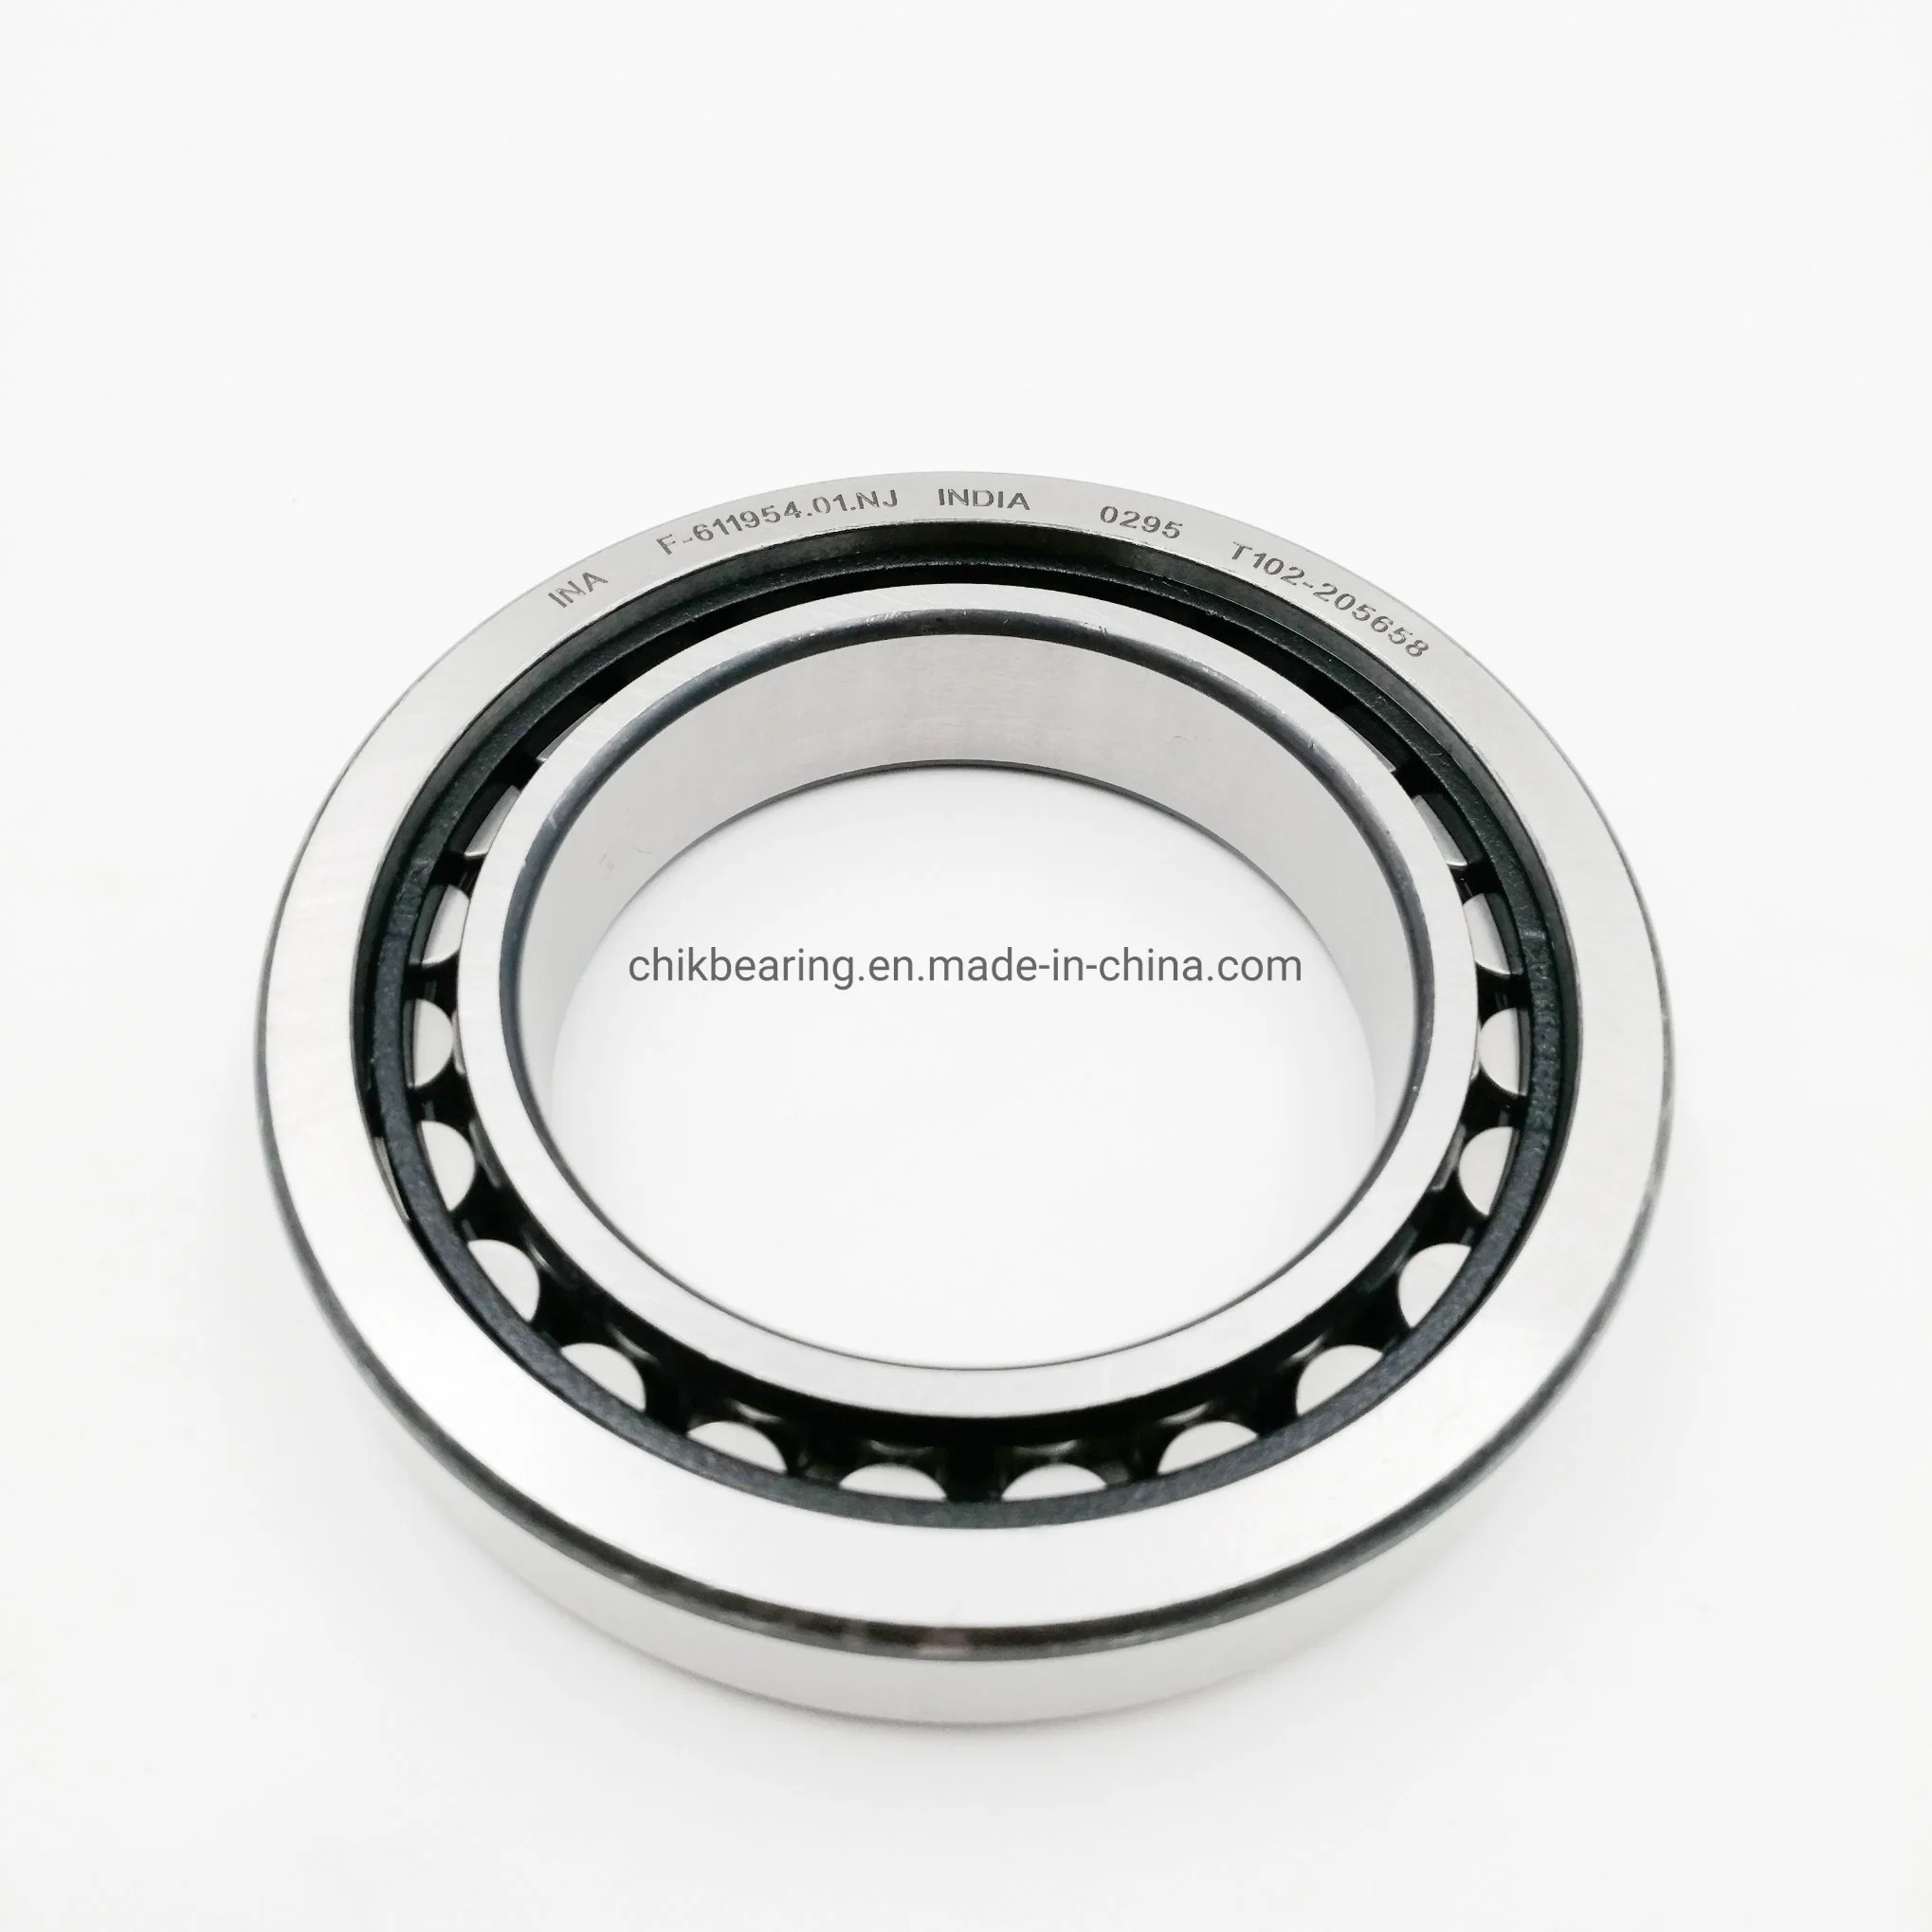 Automobile Bearing Wheel Bearing F-611954.01. Nj Cylindrical Roller Bearing Black Nylon Cage